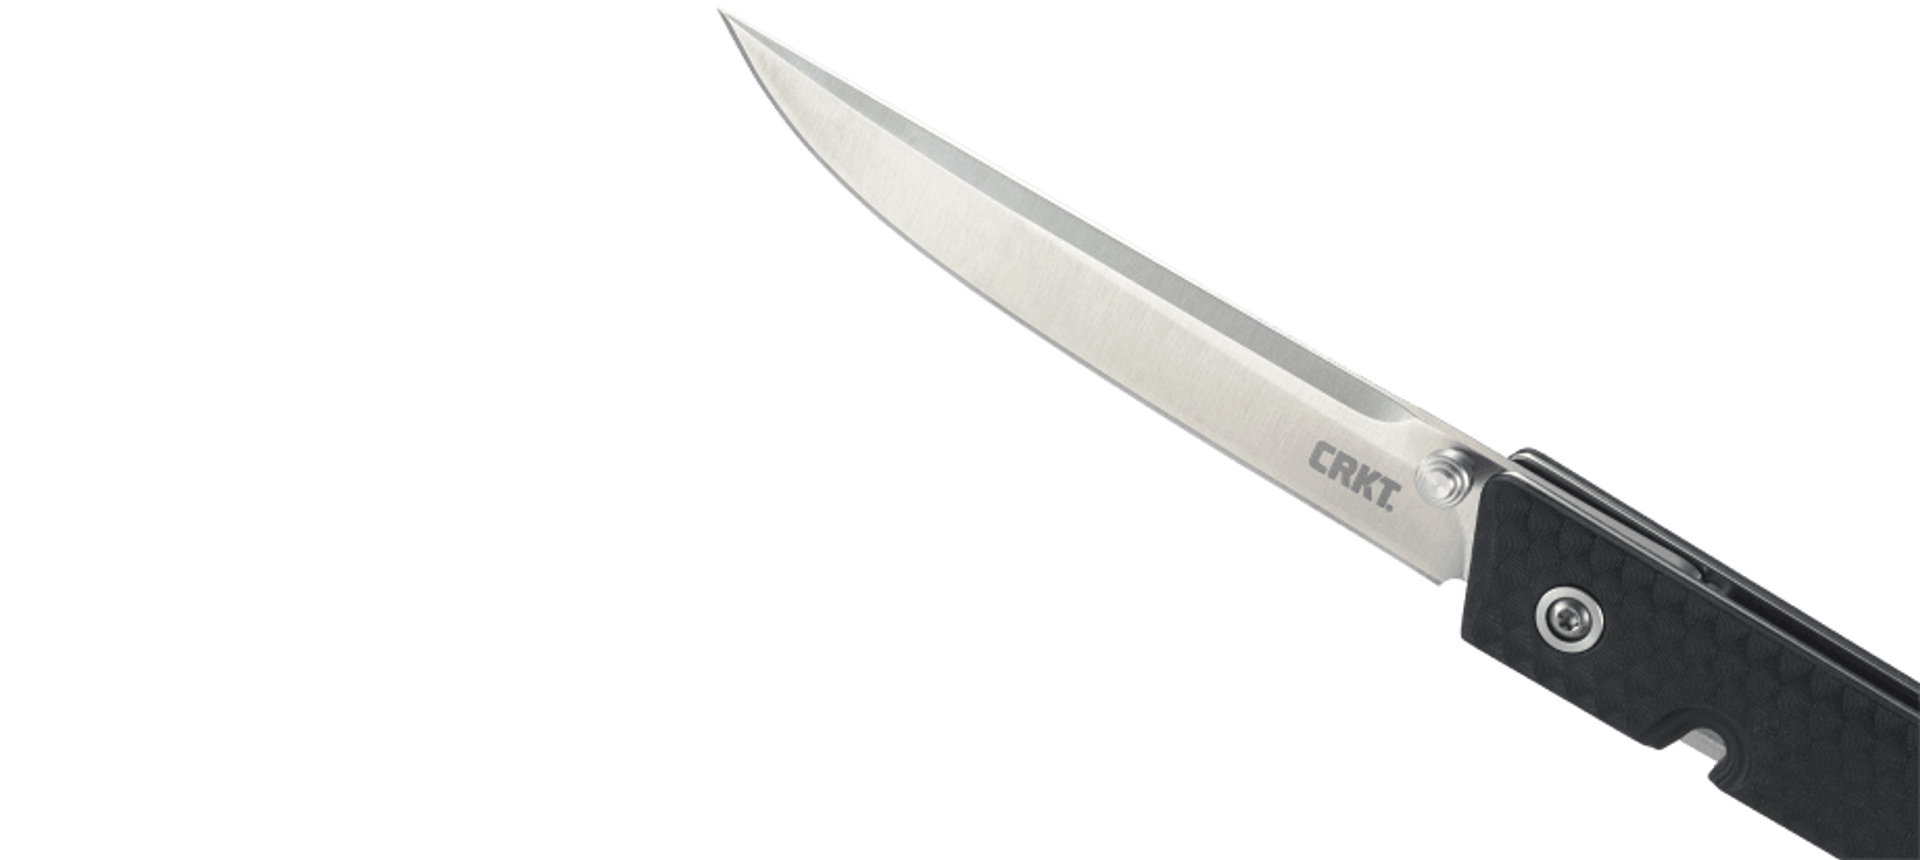 CEO Thumbstud pocket knife